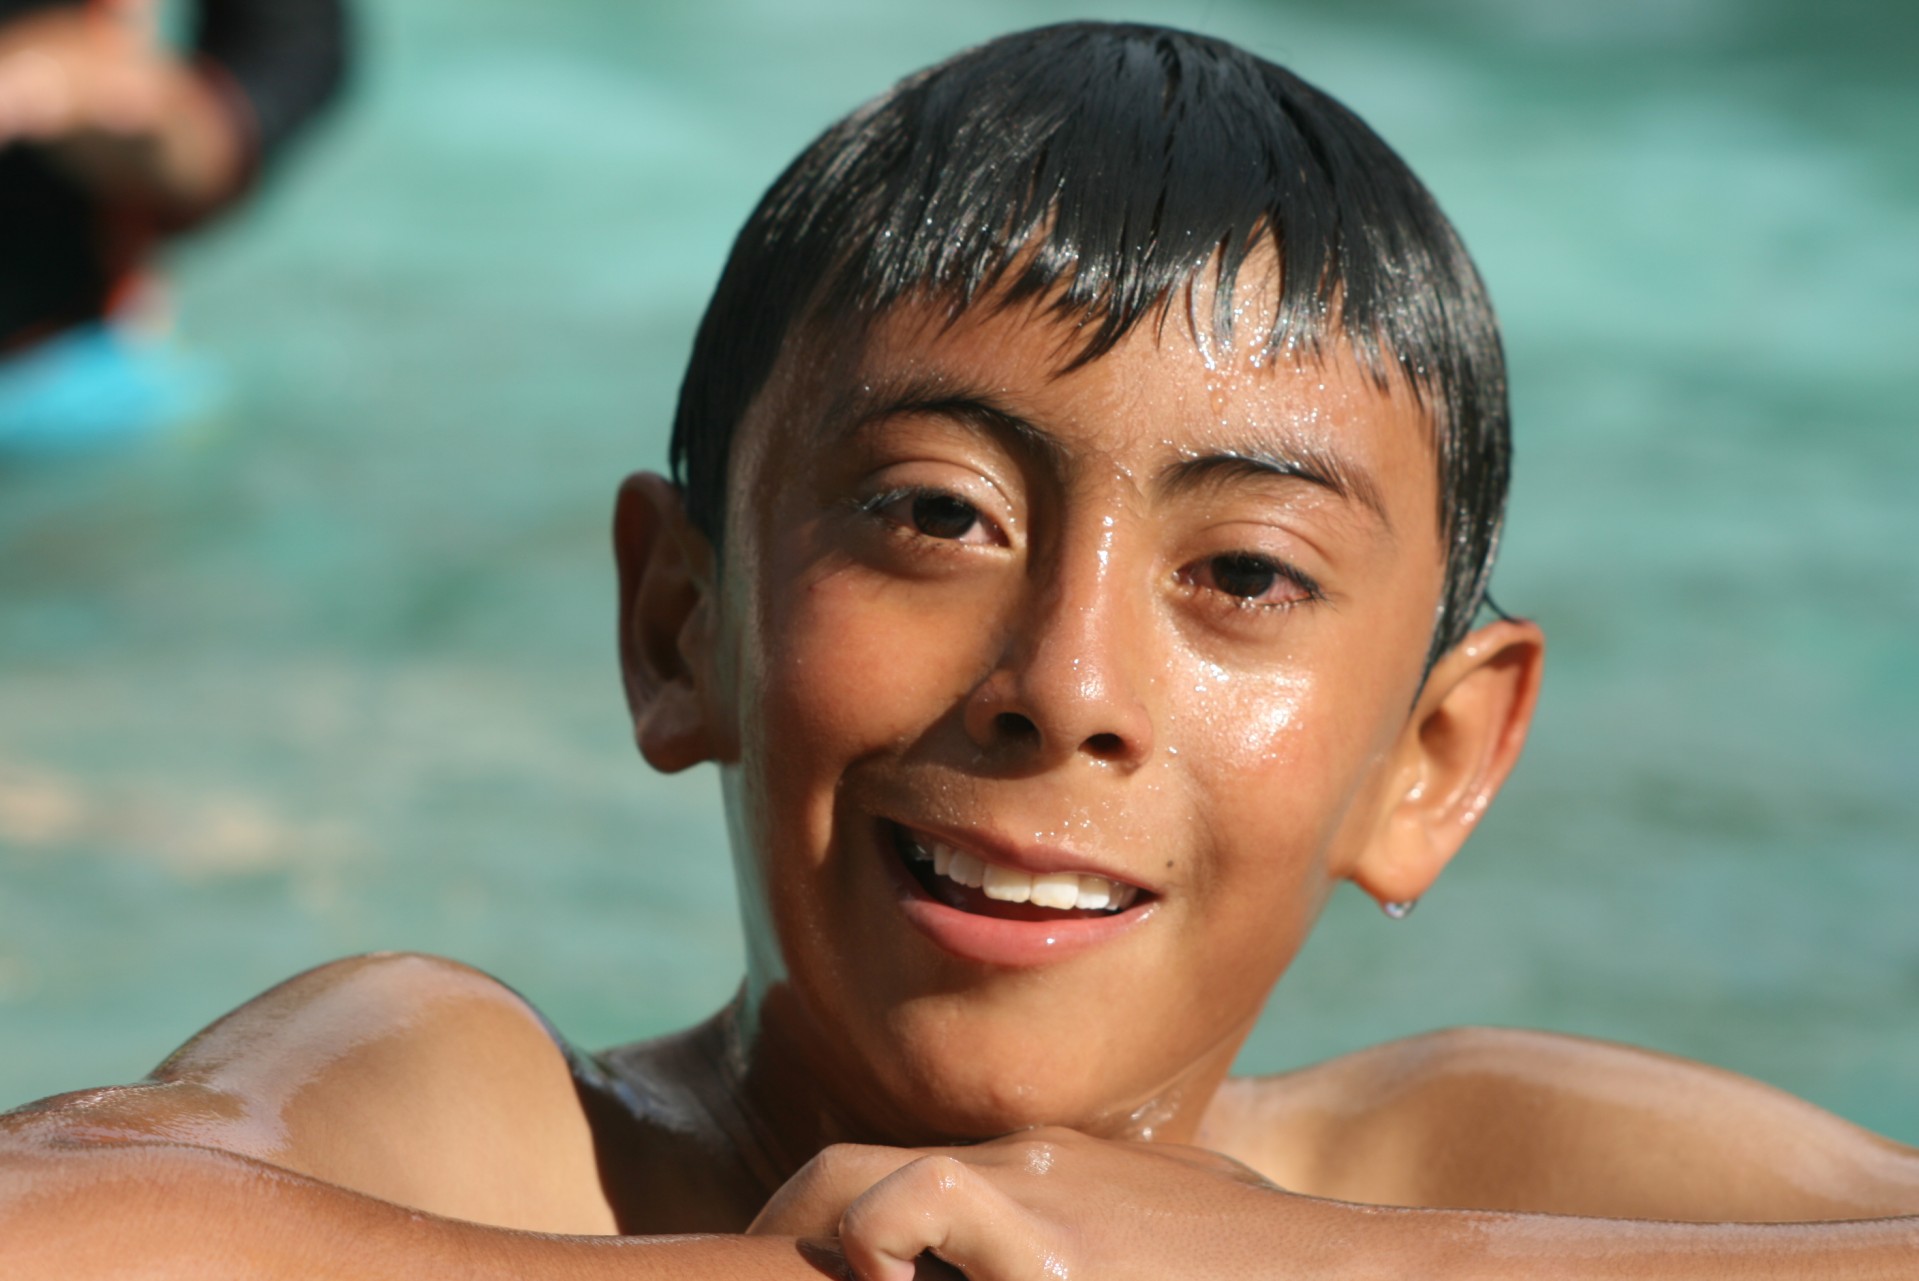 child water swimming pool wet smile free photo